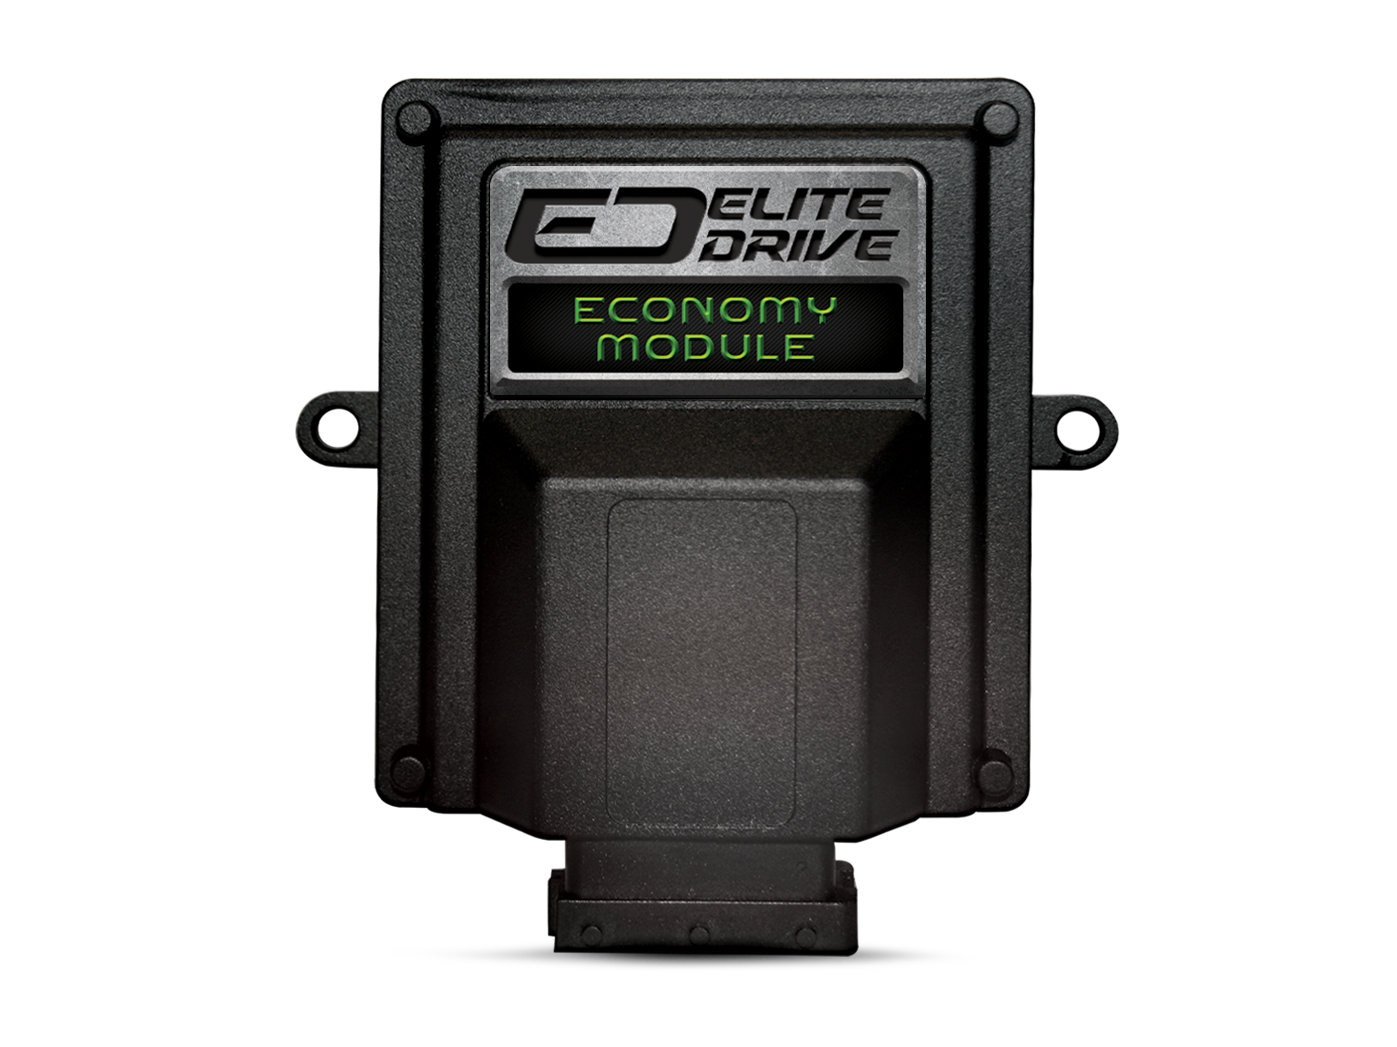 EliteDrive Diesel Economy Power Module suits Isuzu MUX